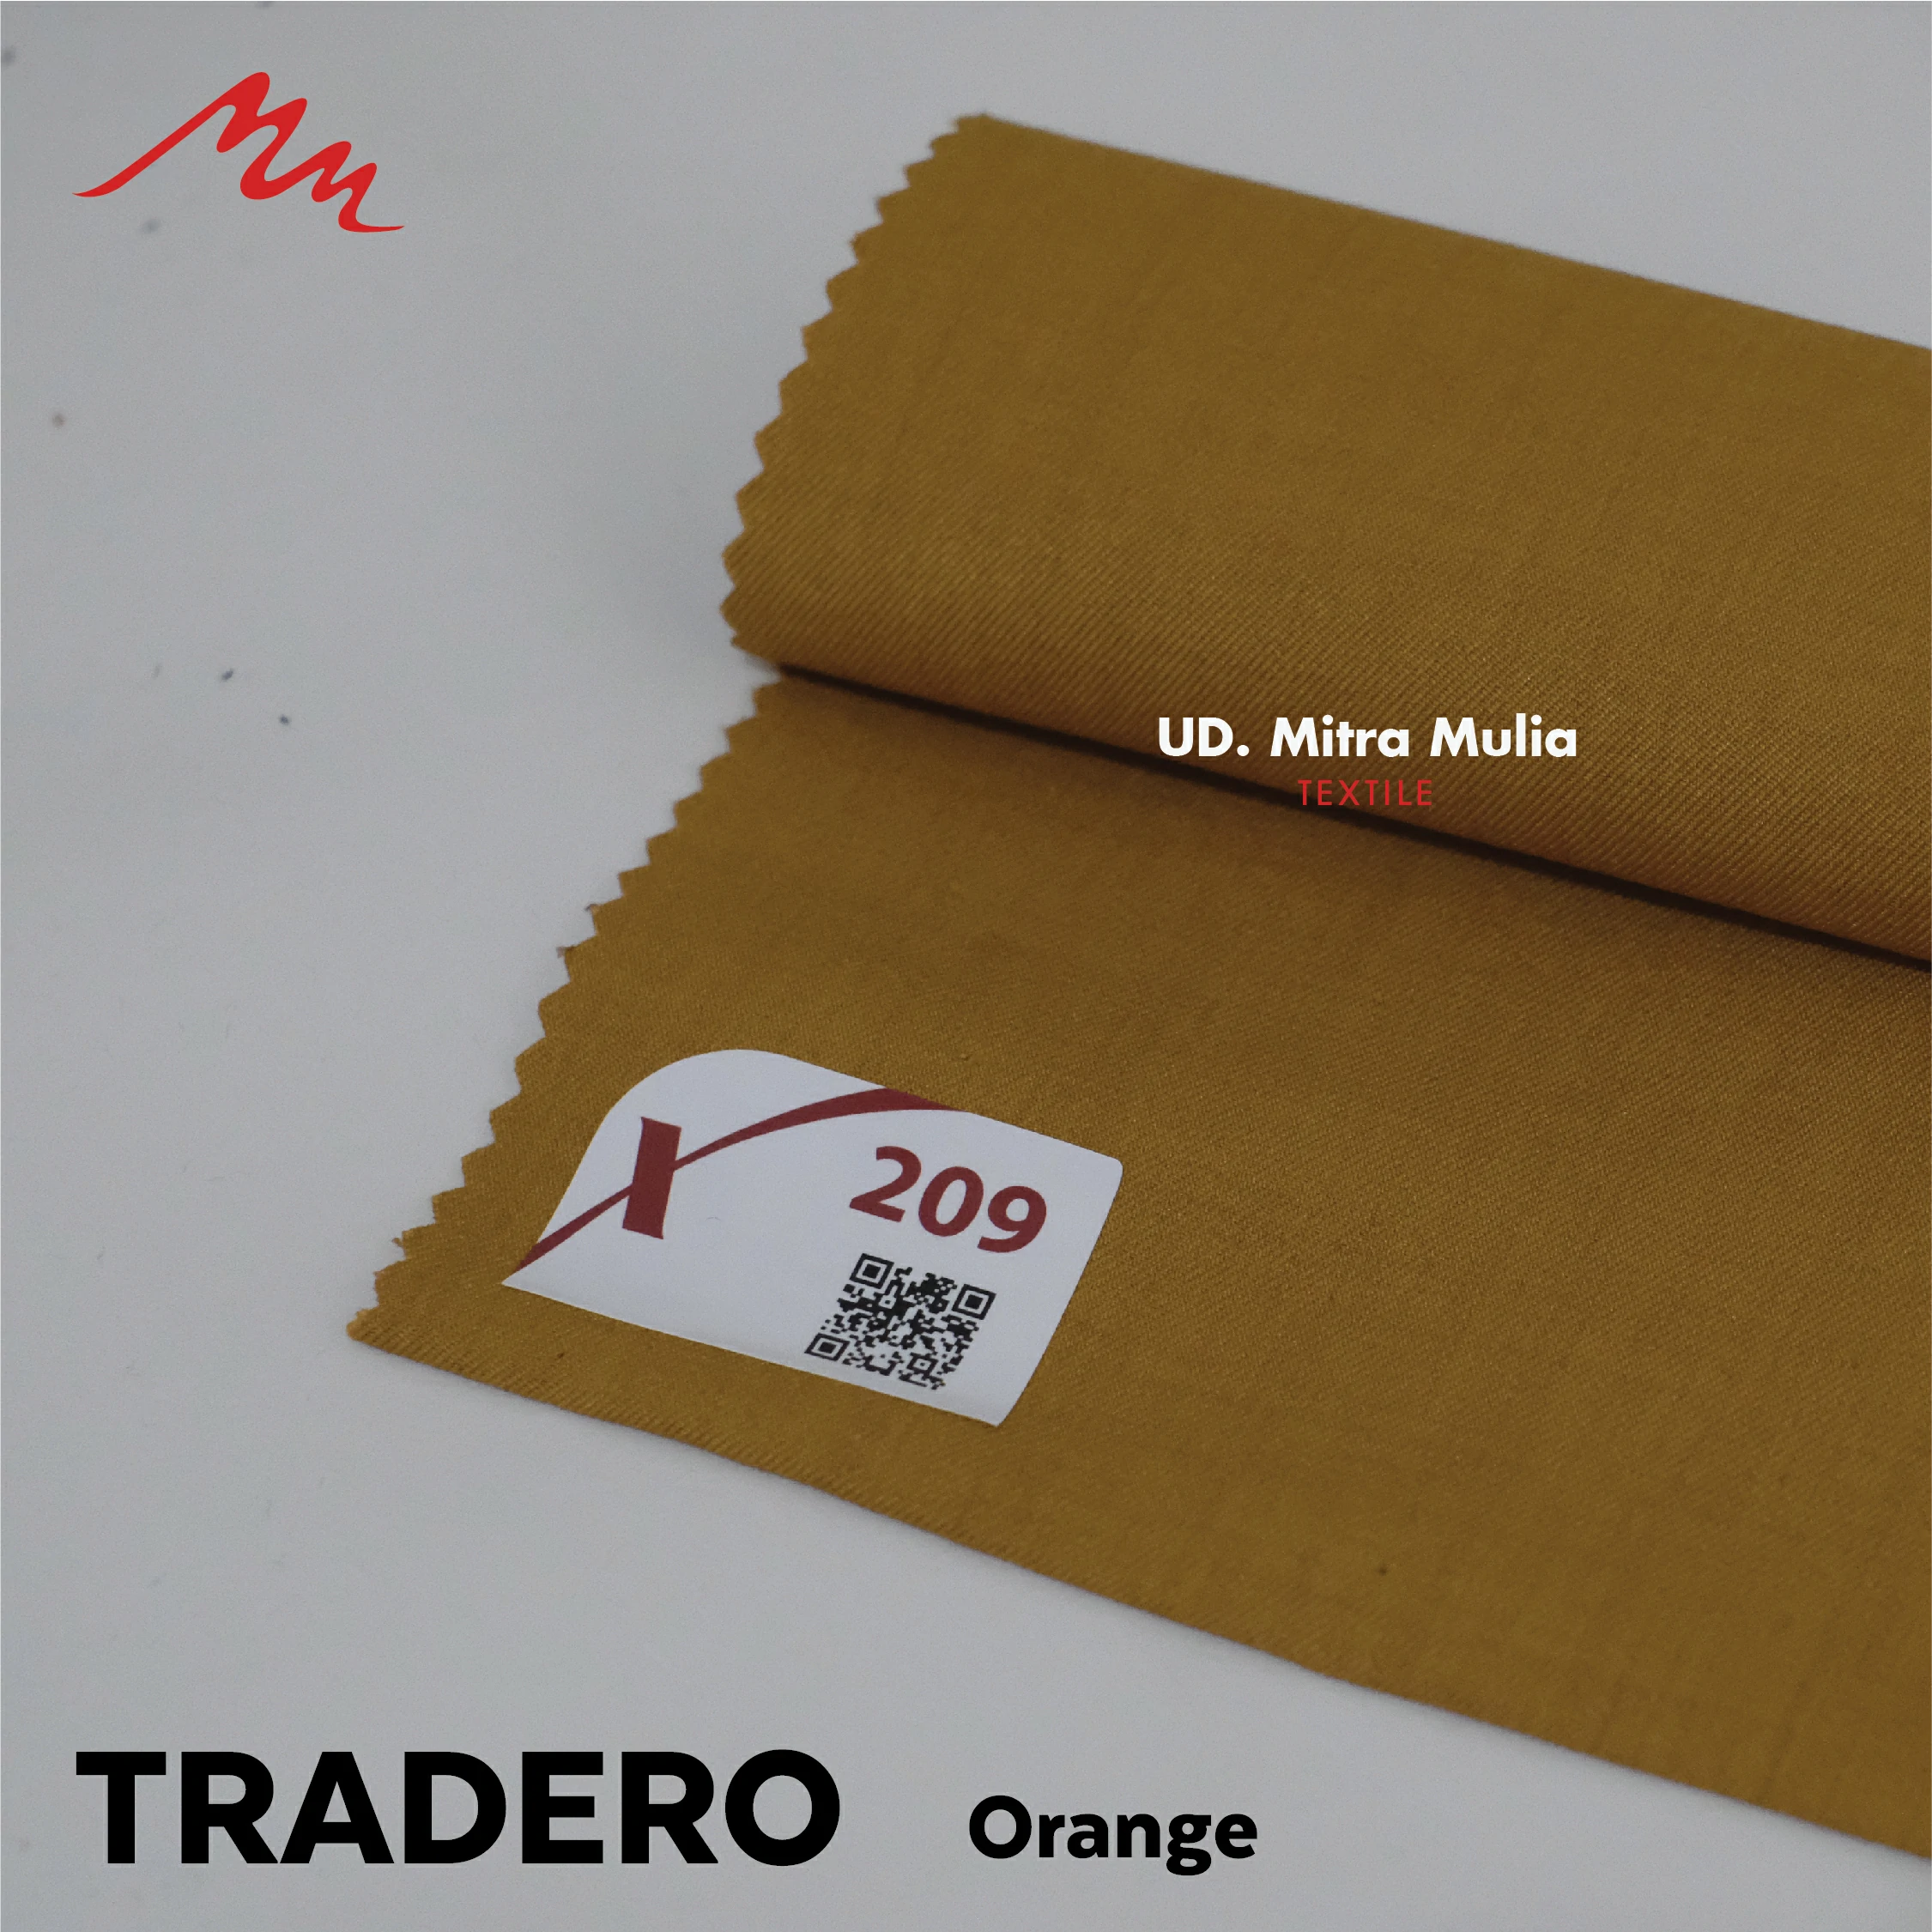 Gambar 1. Tradero Kode 209 Warna Mustard Part 1